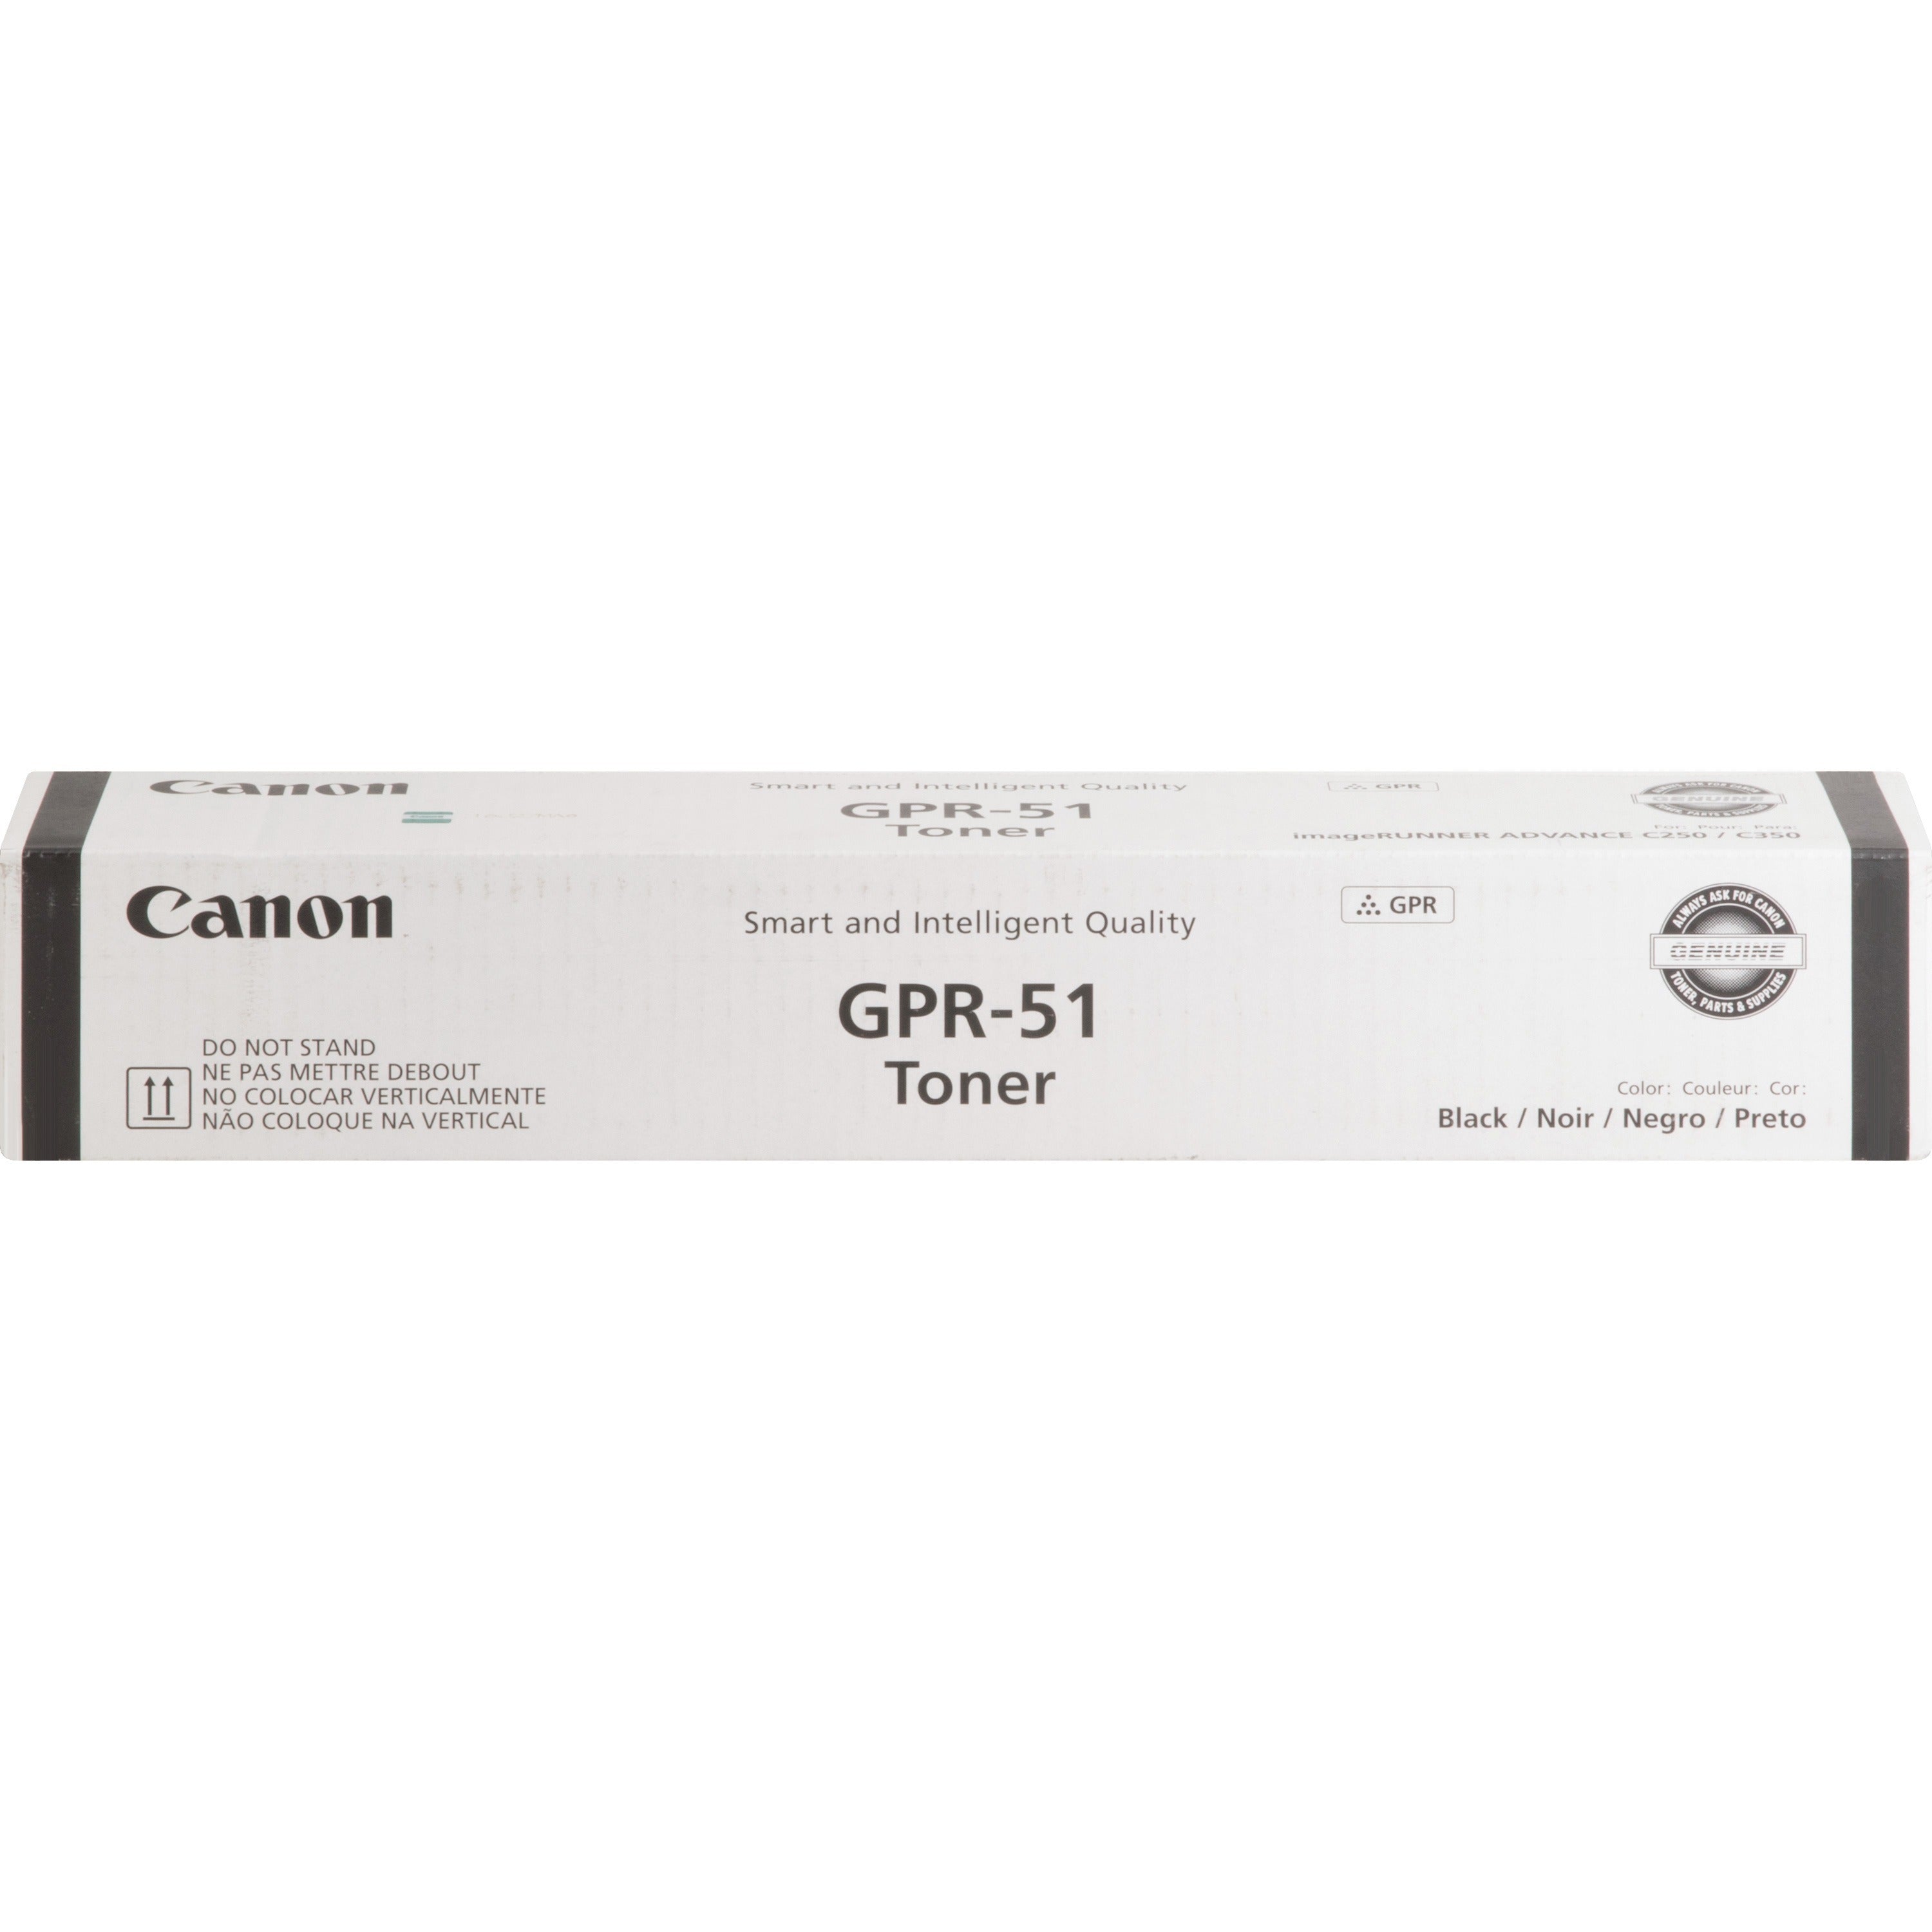 canon-gpr-51-original-laser-toner-cartridge-black-1-each-19000-pages_cnmgpr51bk - 1